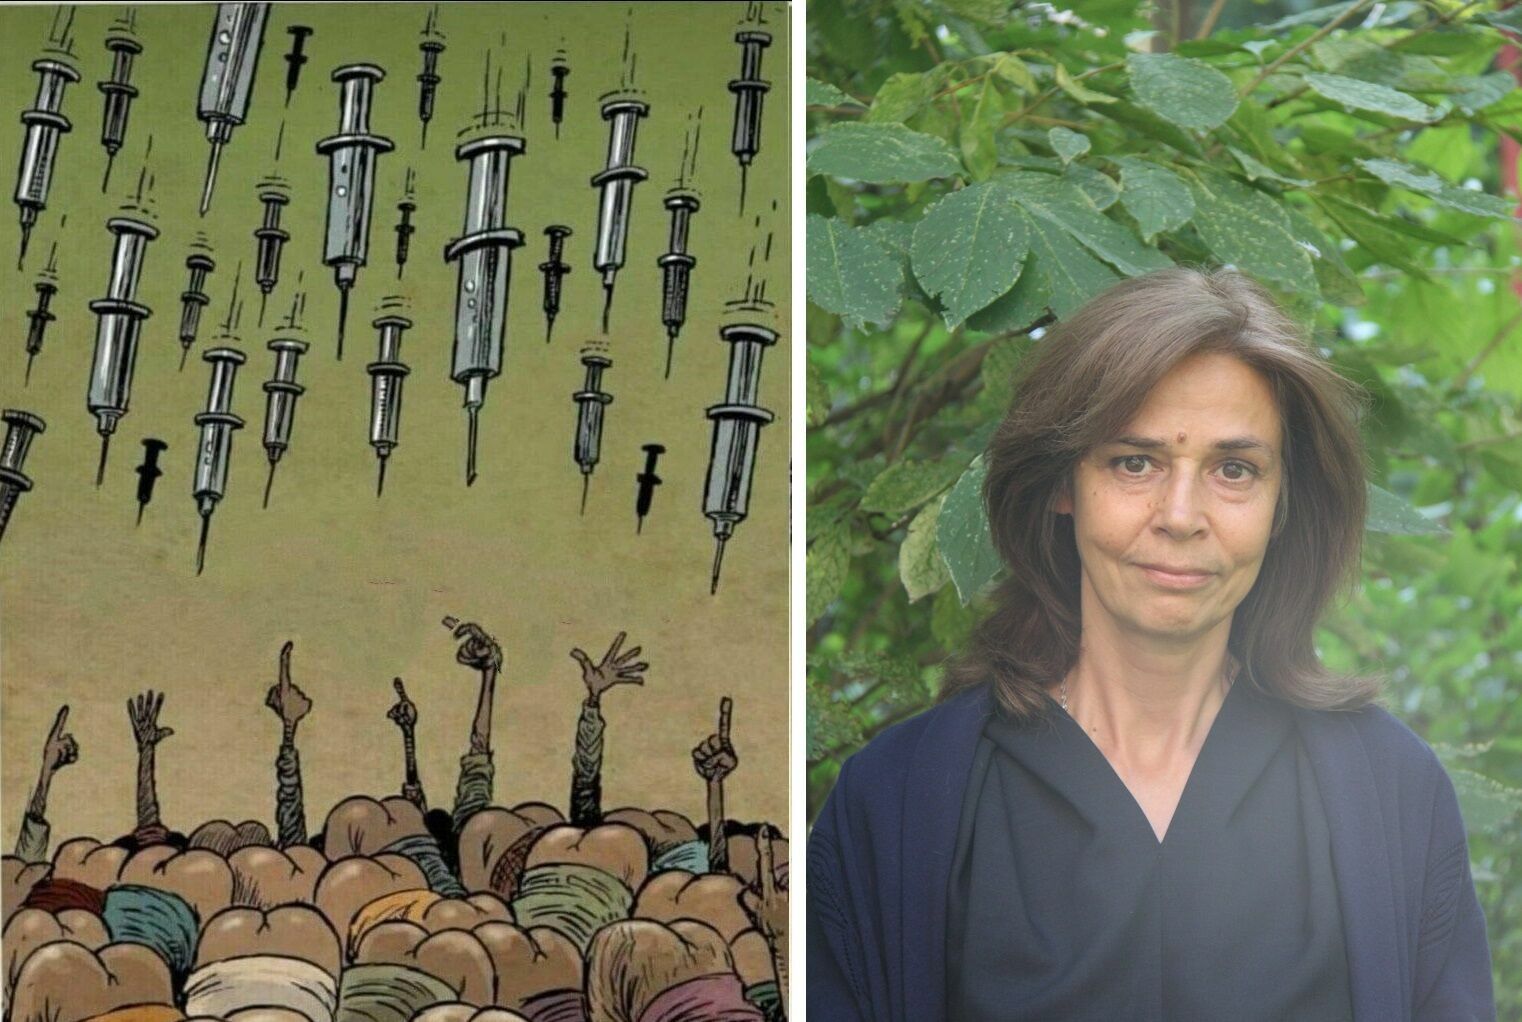 Chetverikova: "The Pandemic Agreement covers the establishment of a new world order"